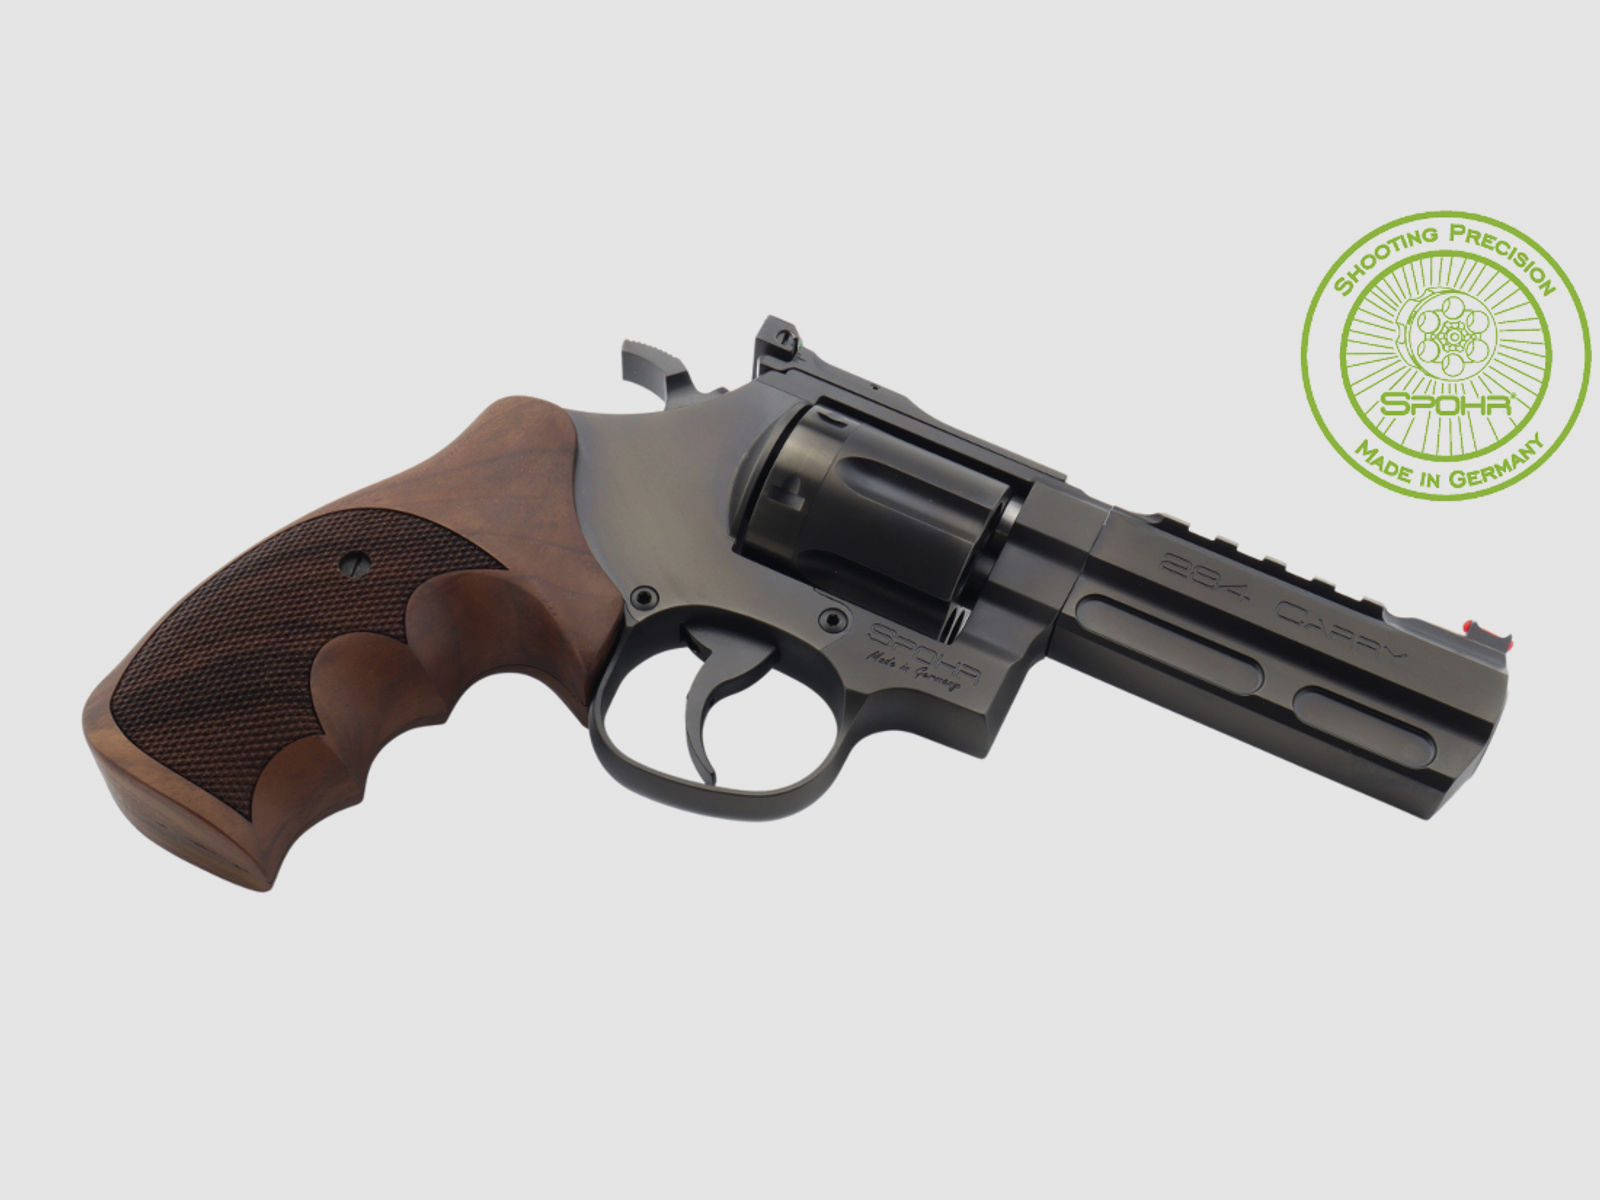 Spohr  284 Carry Black 4 Zoll Revolver mit Wechseltrommel 9mm Made in Germany